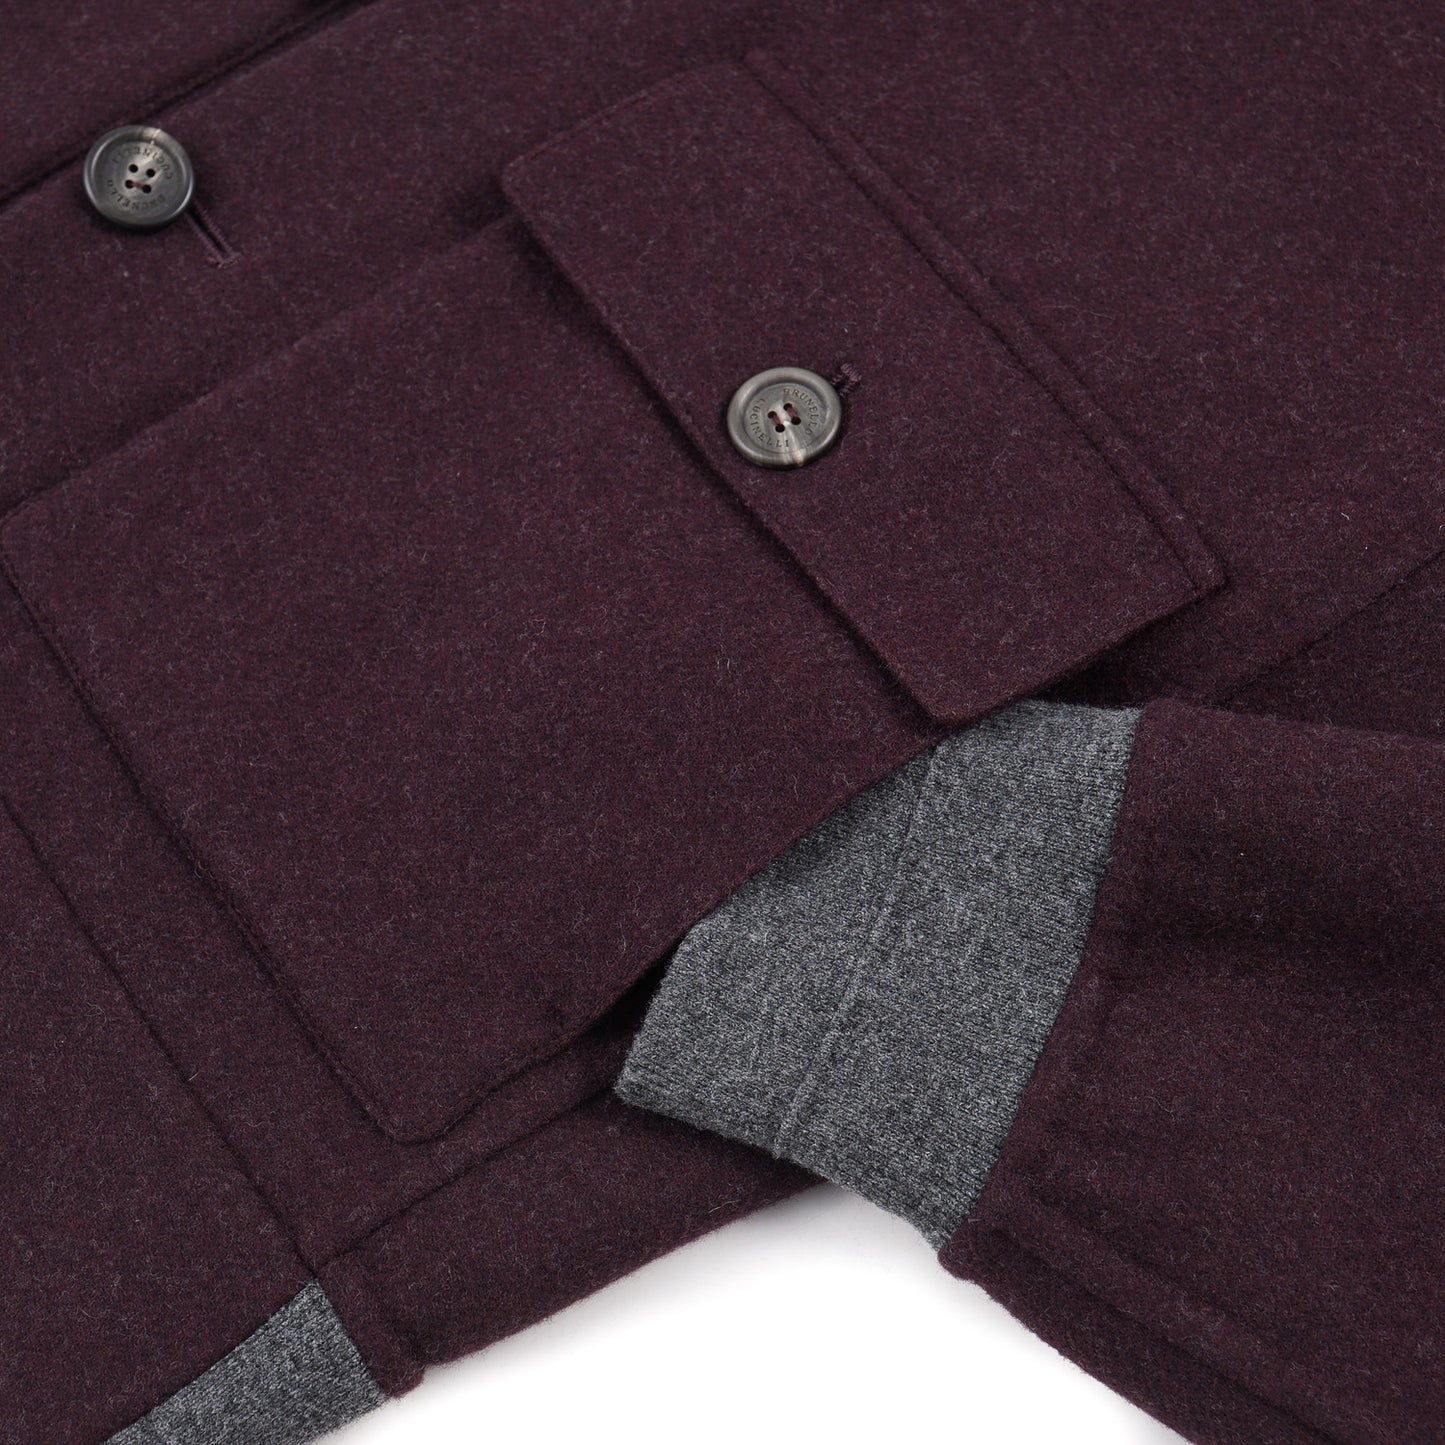 Brunello Cucinelli Soft Wool Bomber Jacket - Top Shelf Apparel